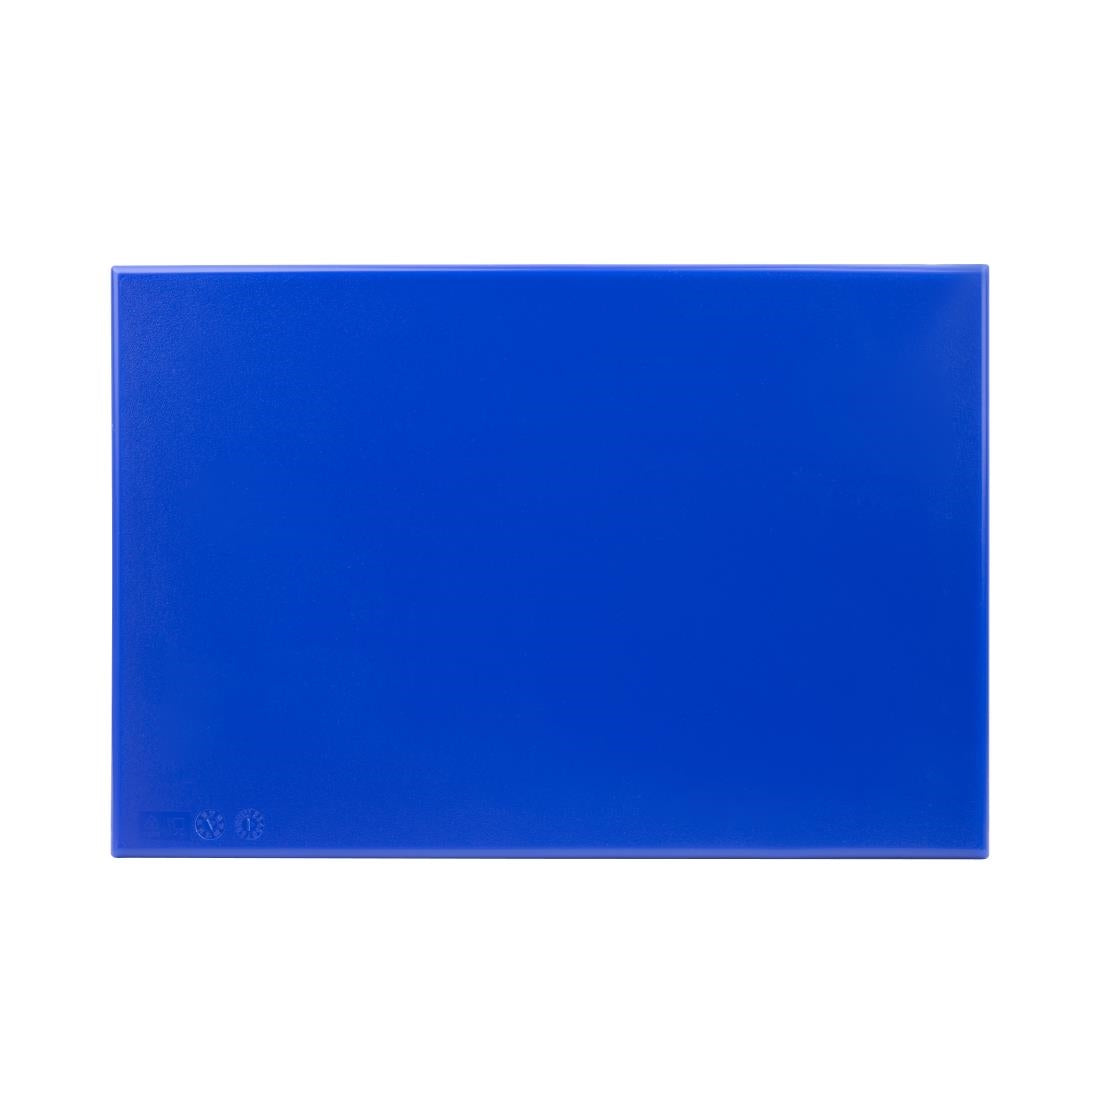 EDLP - Hygiplas High Density Chopping Board Blue - 450x300x12mm 17.75x12x0.5"